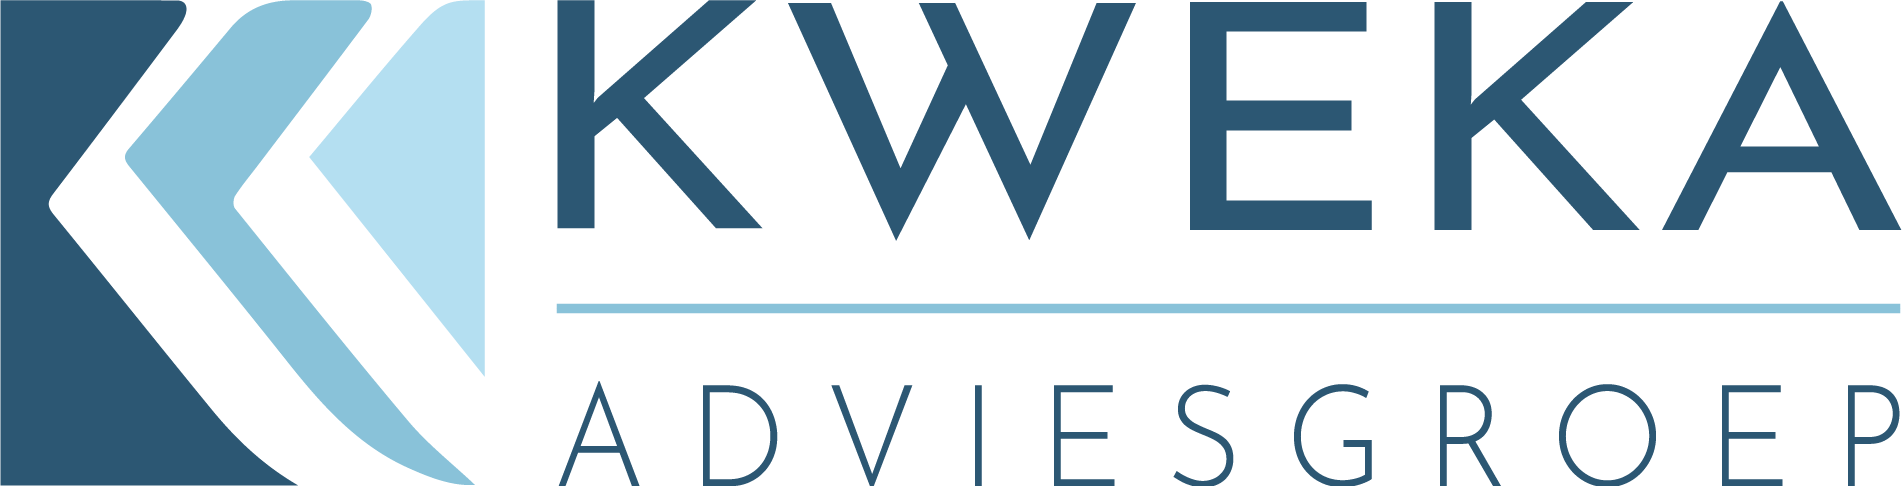 Logo Kweka png transparant